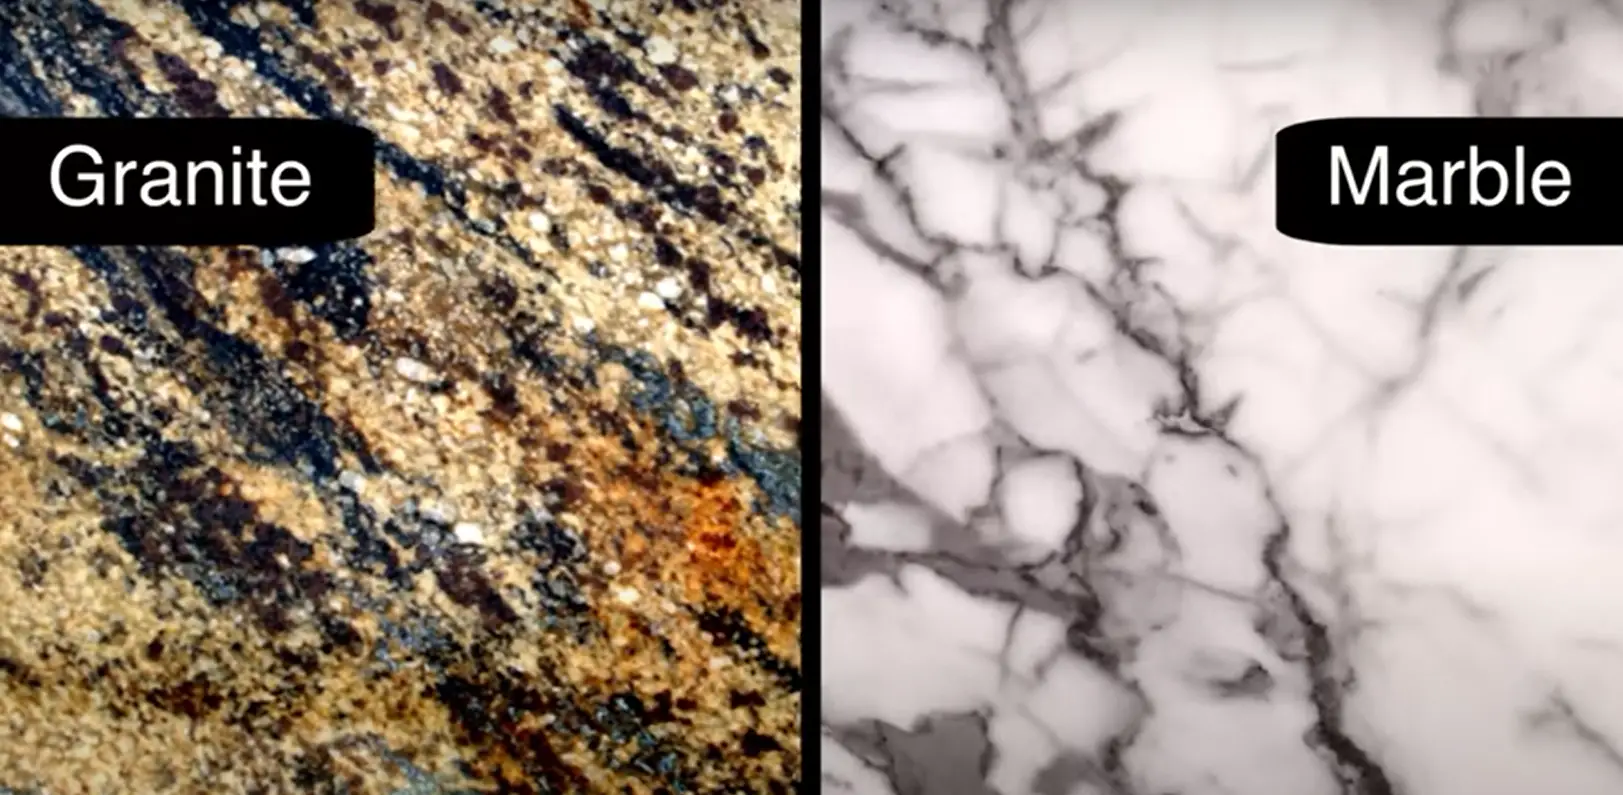 Granite and Marble countertops